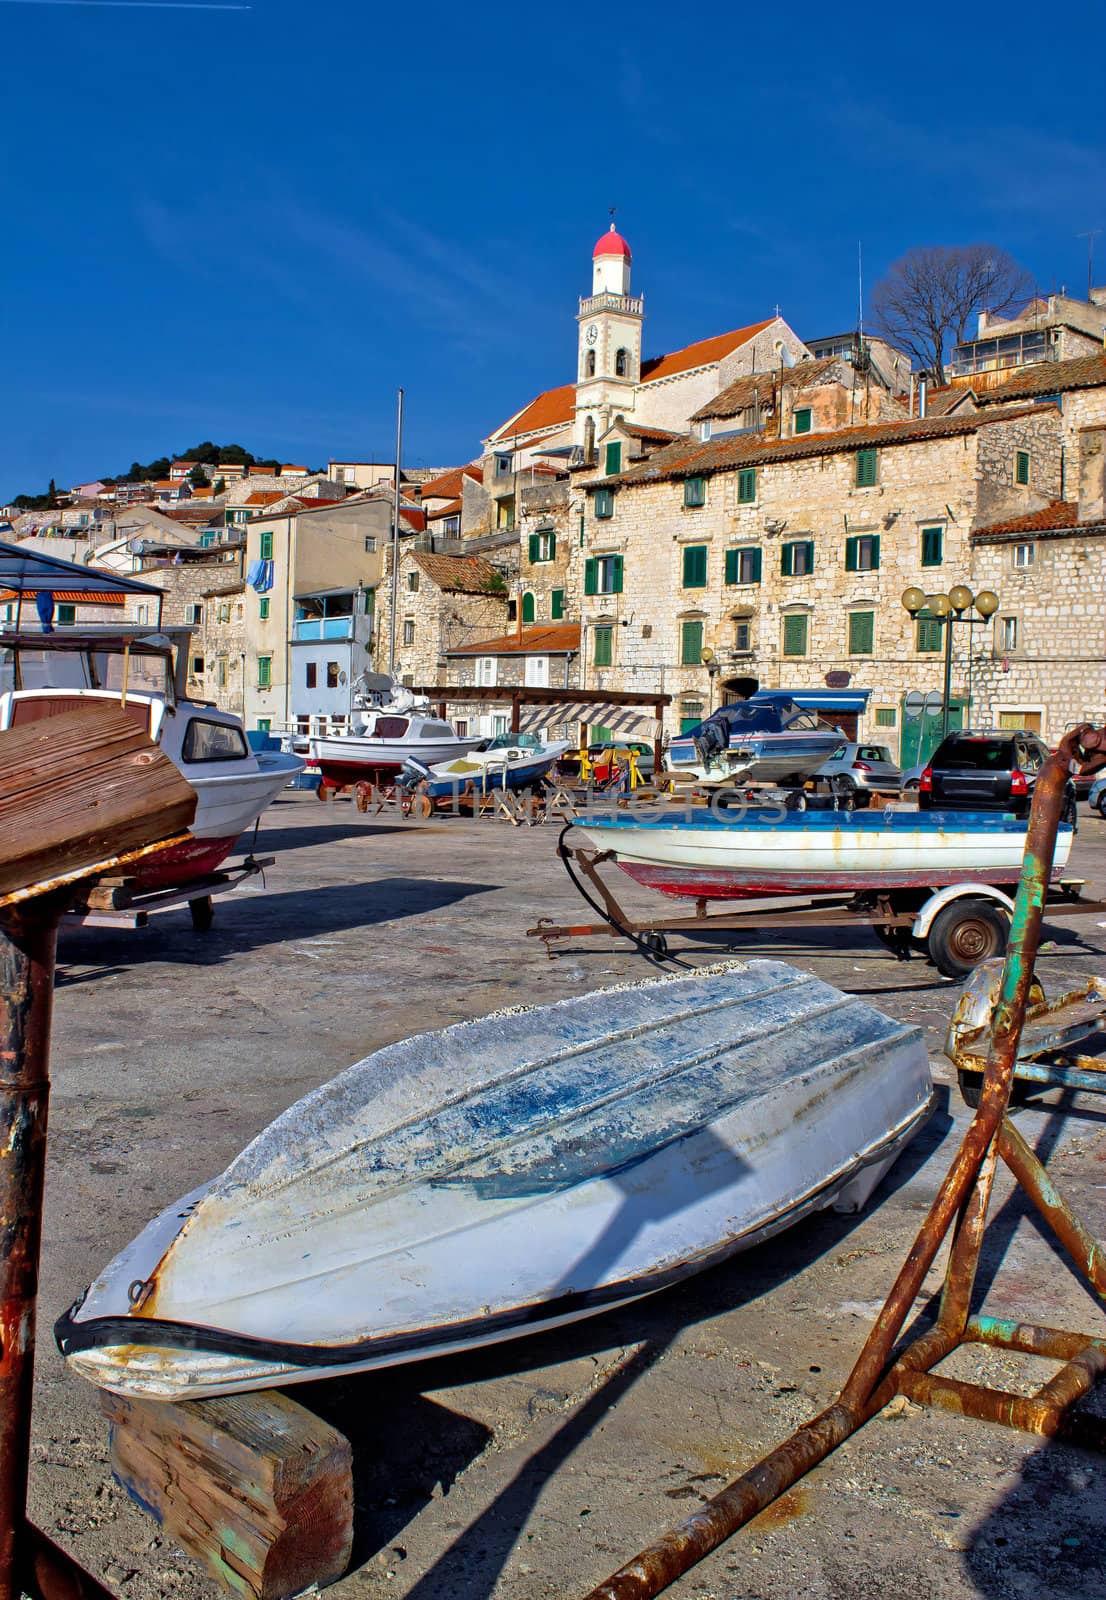 Town of sibenik old harbor and waterfront, Dalmatia, Croatia